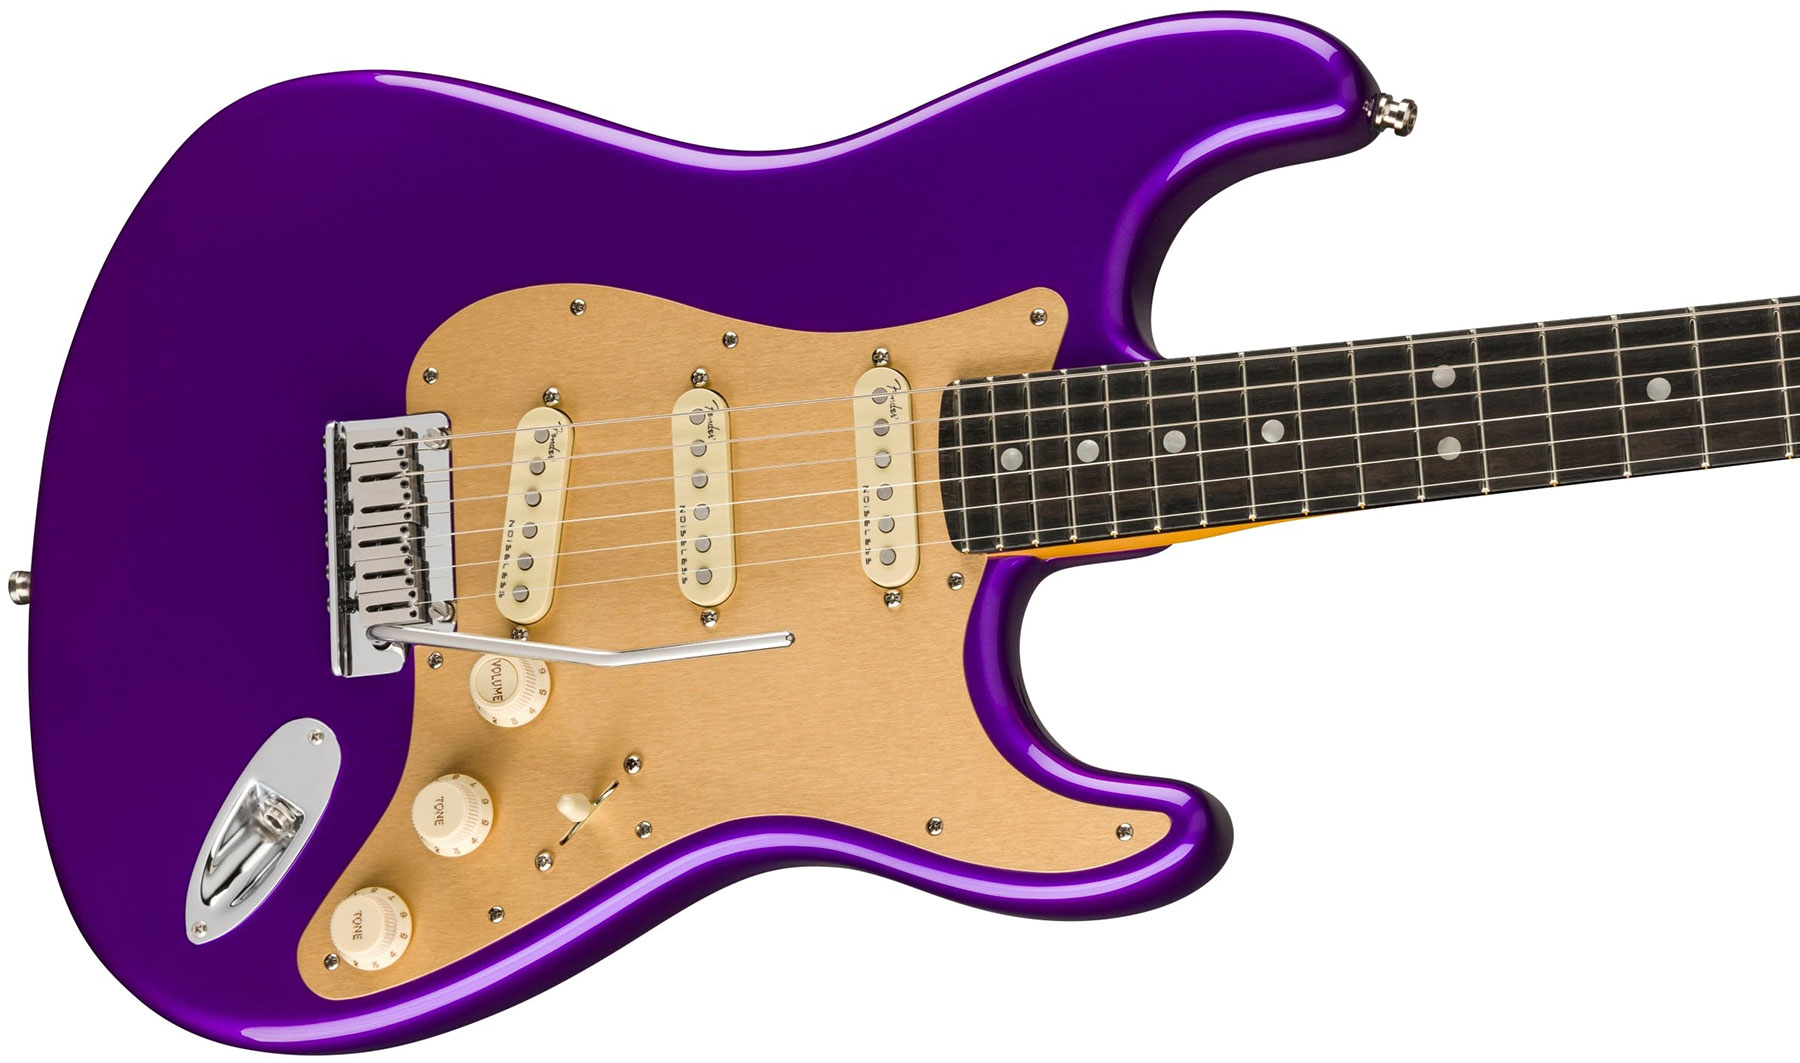 Fender Strat American Ultra Ltd Usa 3s Trem Eb - Plum Metallic - Str shape electric guitar - Variation 2